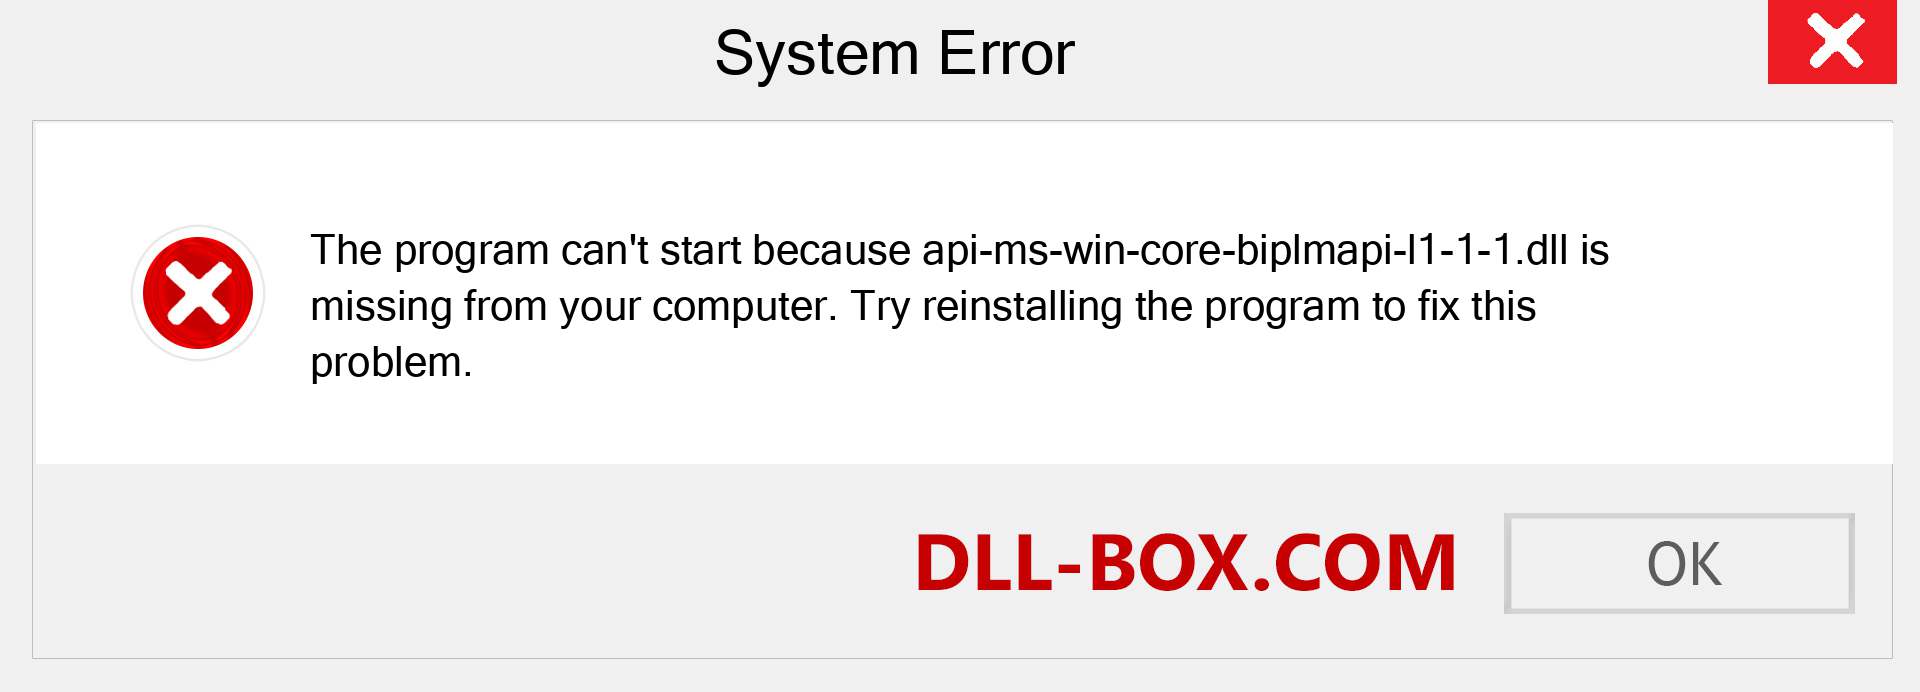  api-ms-win-core-biplmapi-l1-1-1.dll file is missing?. Download for Windows 7, 8, 10 - Fix  api-ms-win-core-biplmapi-l1-1-1 dll Missing Error on Windows, photos, images